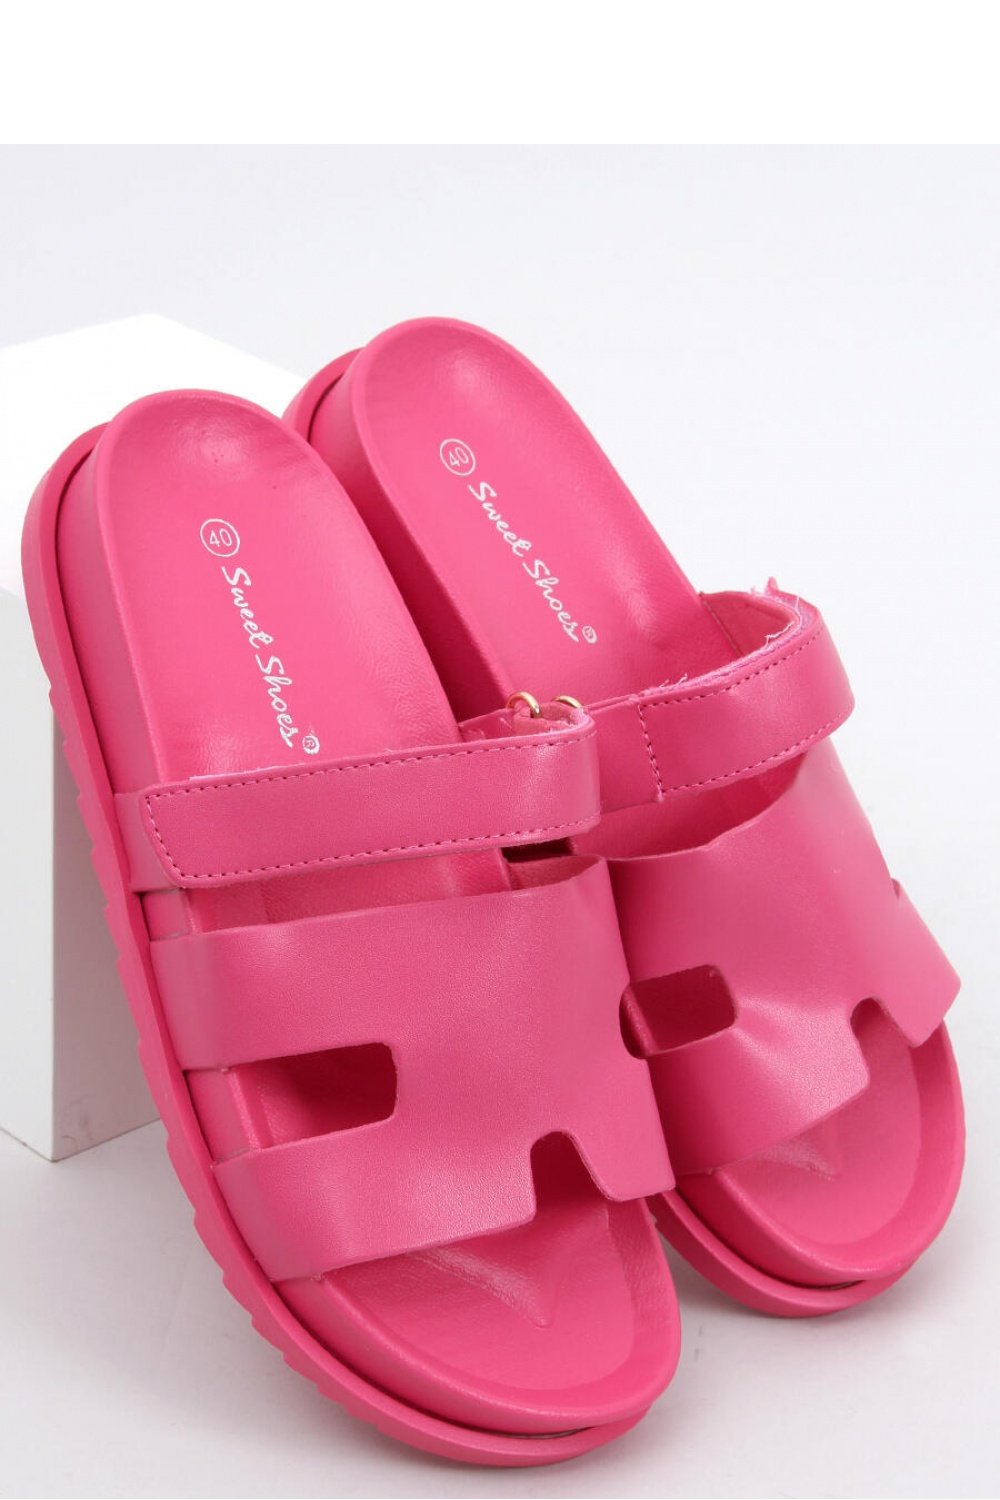 Flip-flops model 167264 Inello Posh Styles Apparel